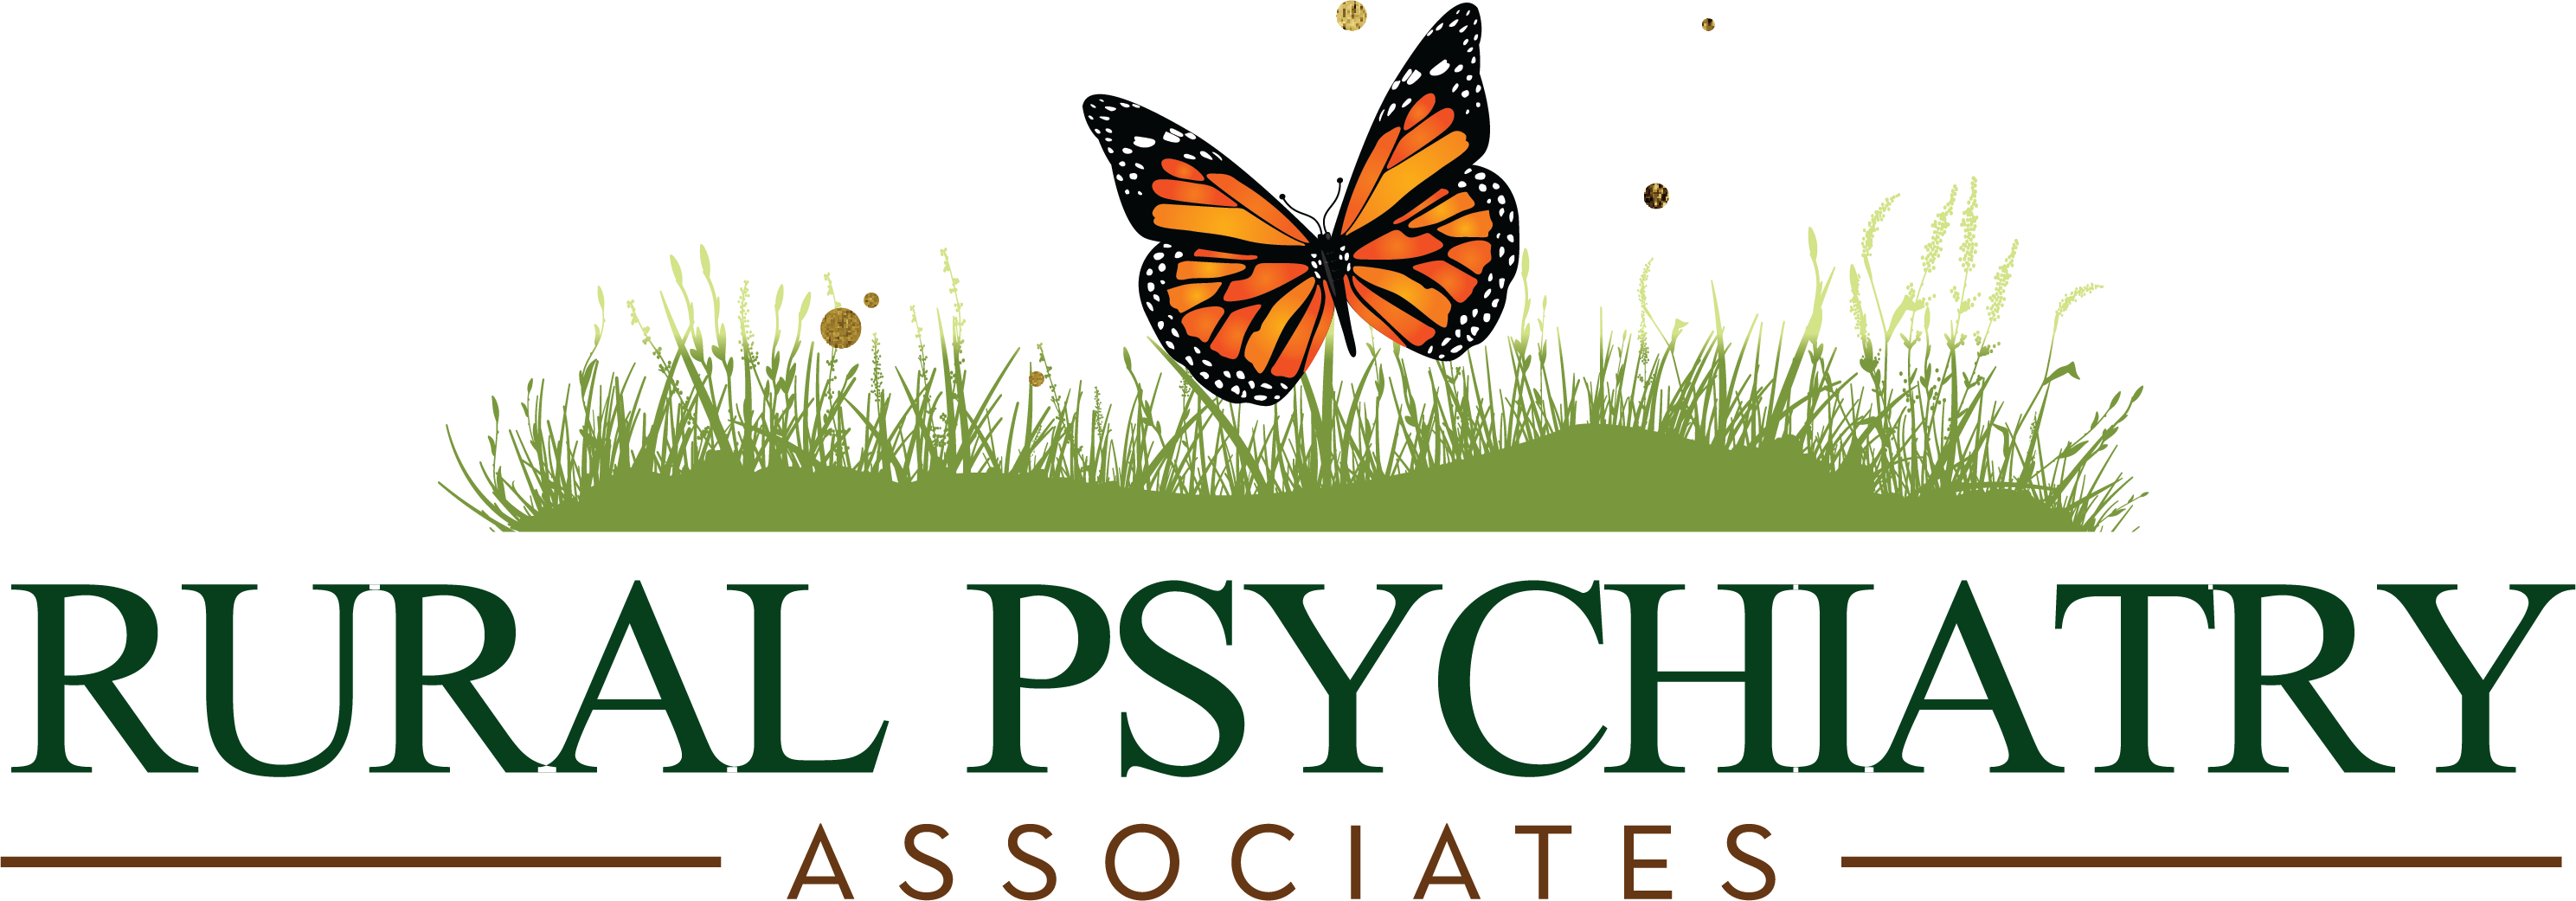 Monarch butterfly flying over field grass - RURAL PSYCHIATRY ASSOCIATES logo